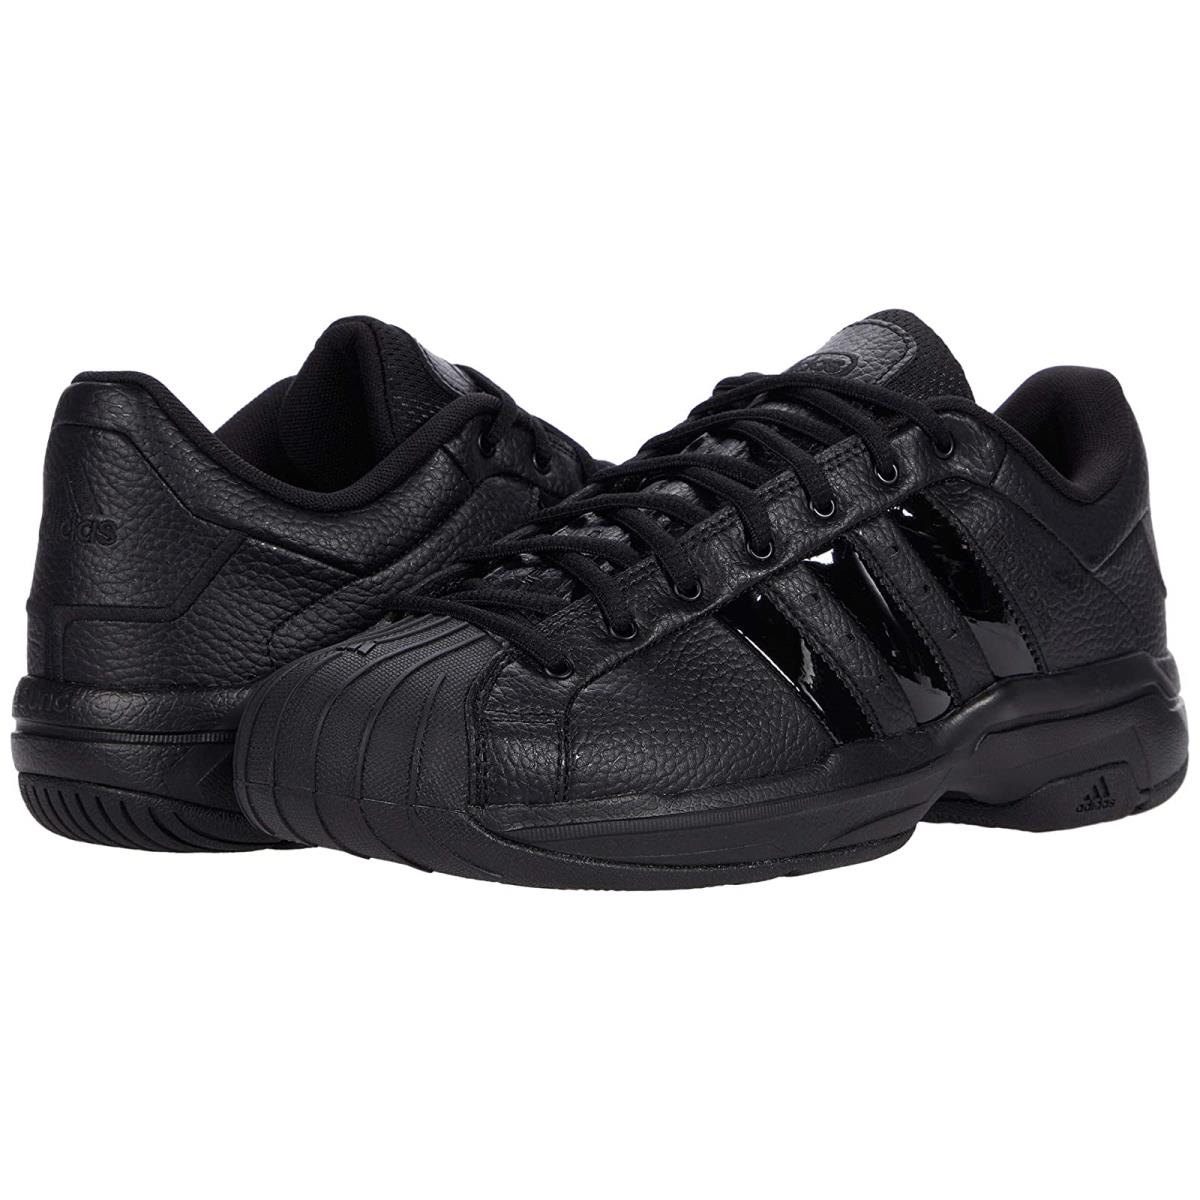 Unisex Sneakers Athletic Shoes Adidas Pro Model 2G Low Black/Black/Black